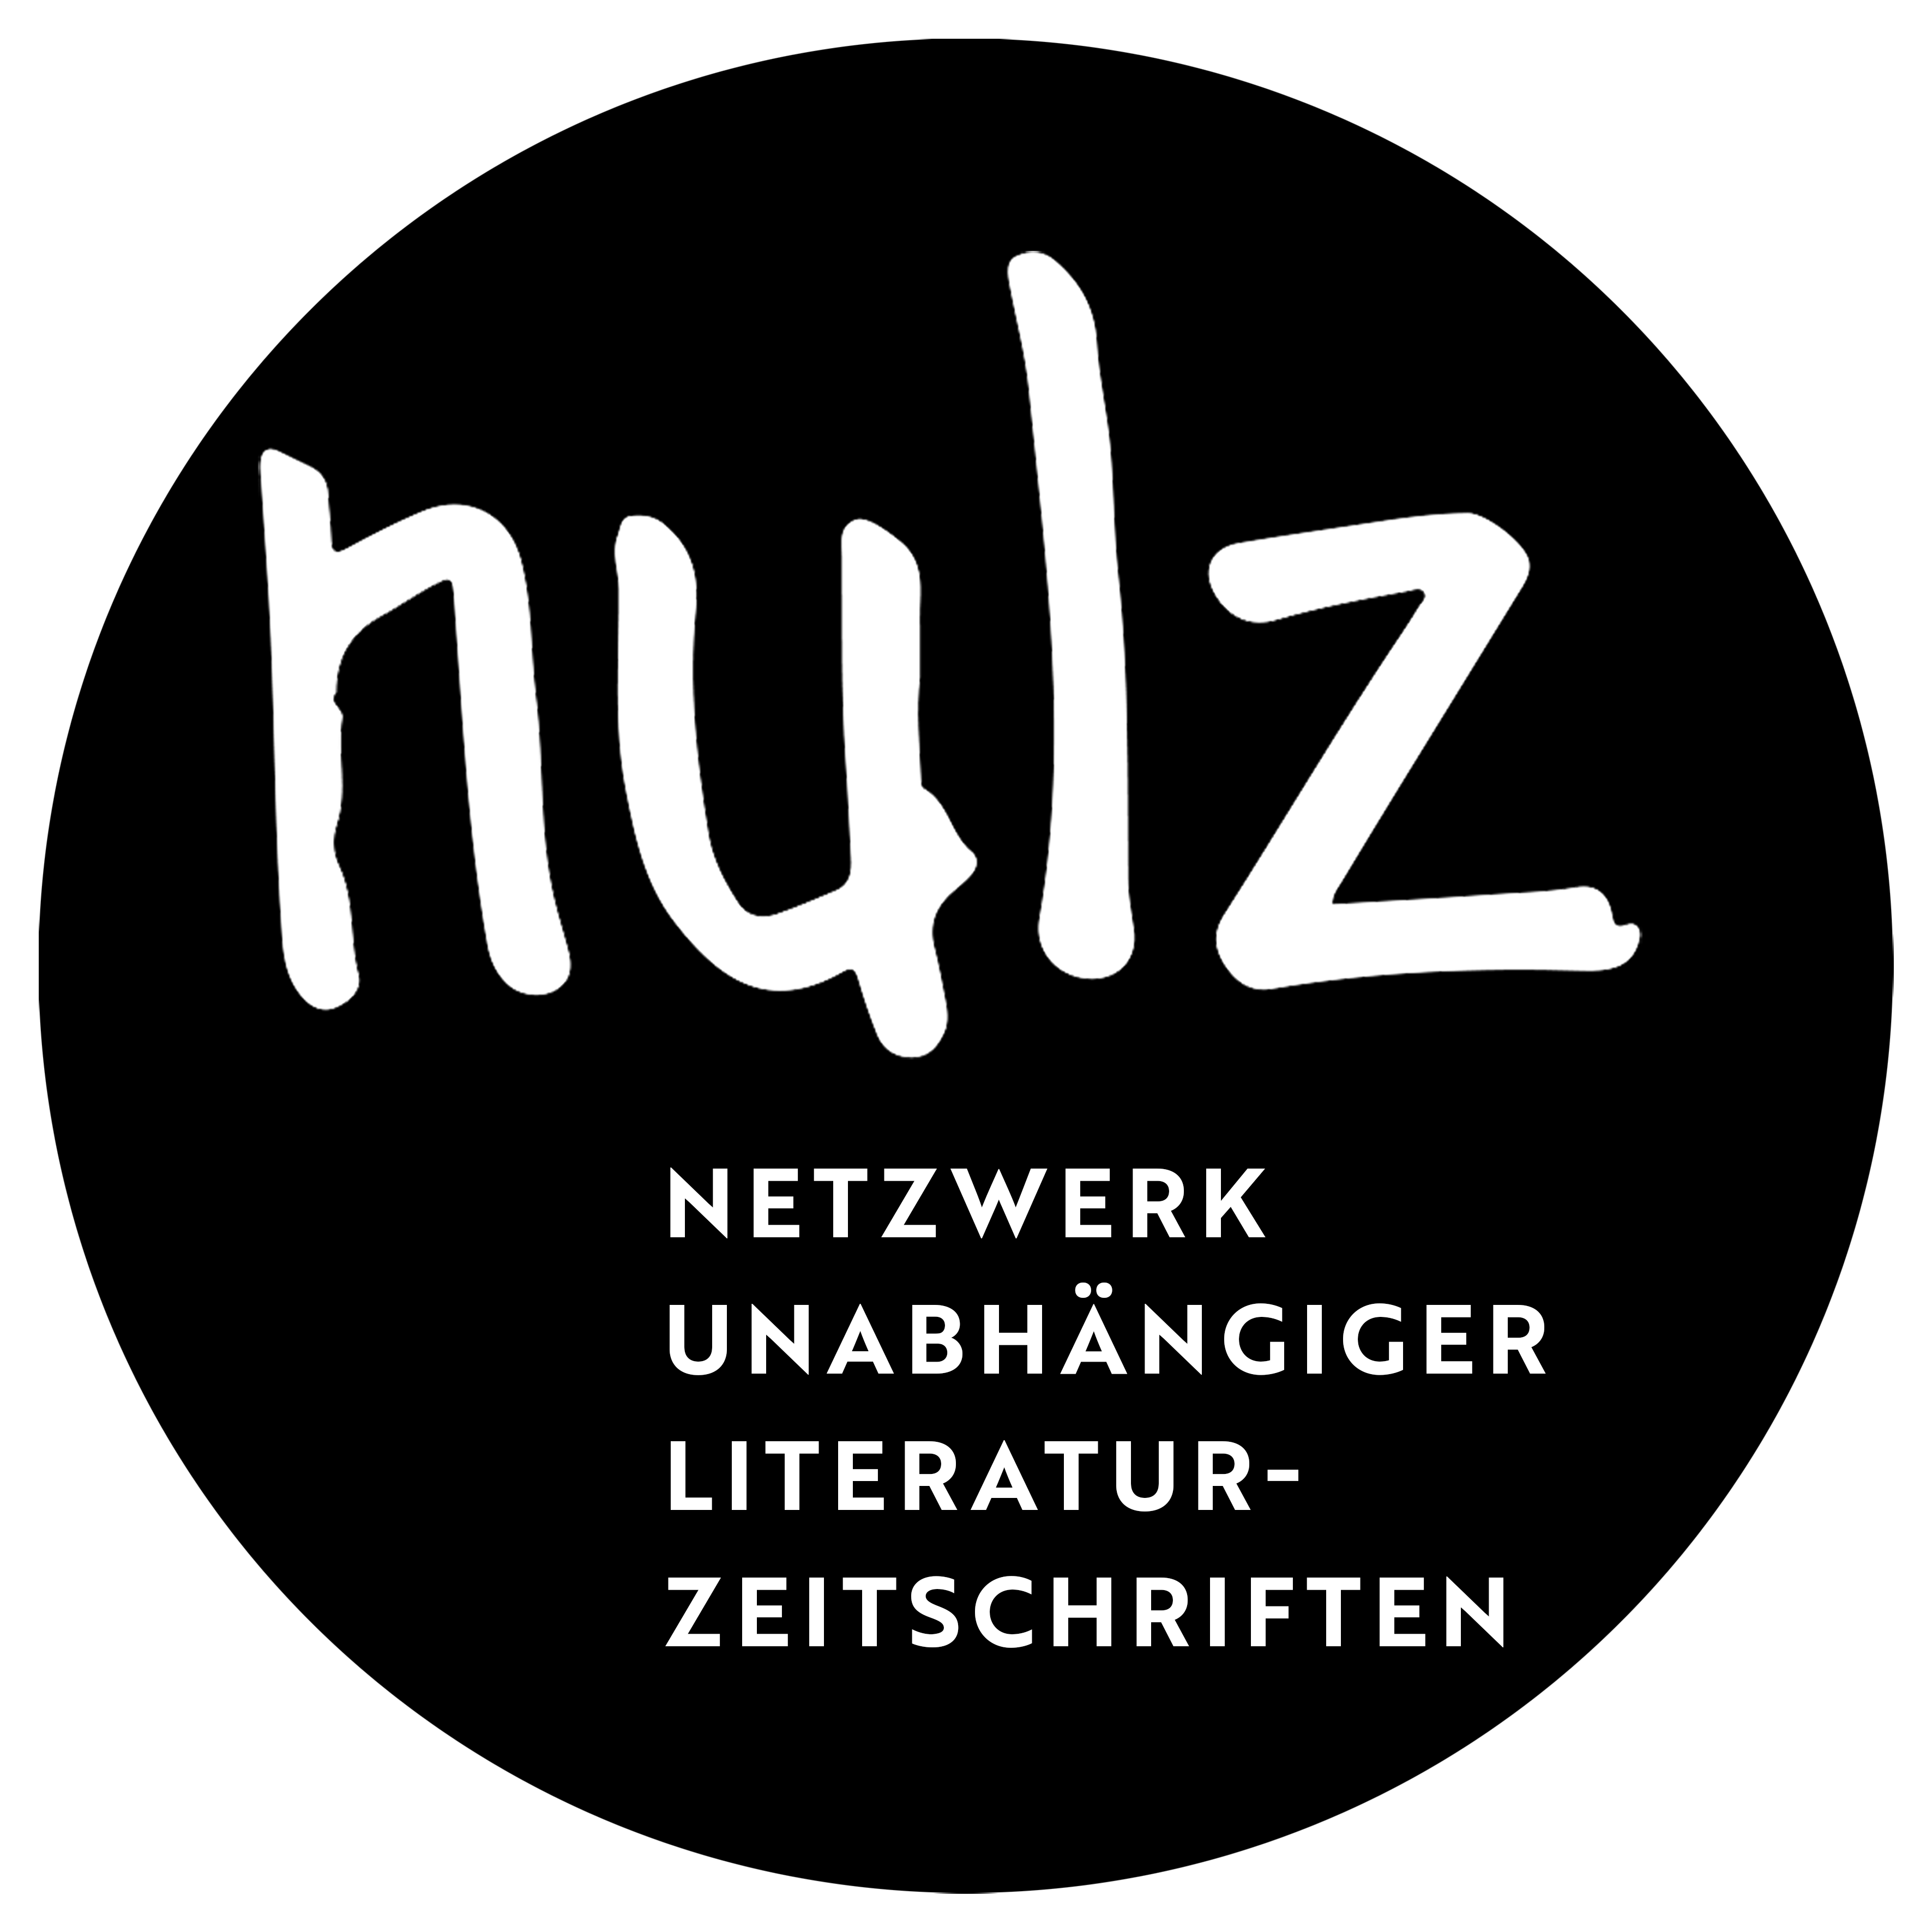 nulz.org